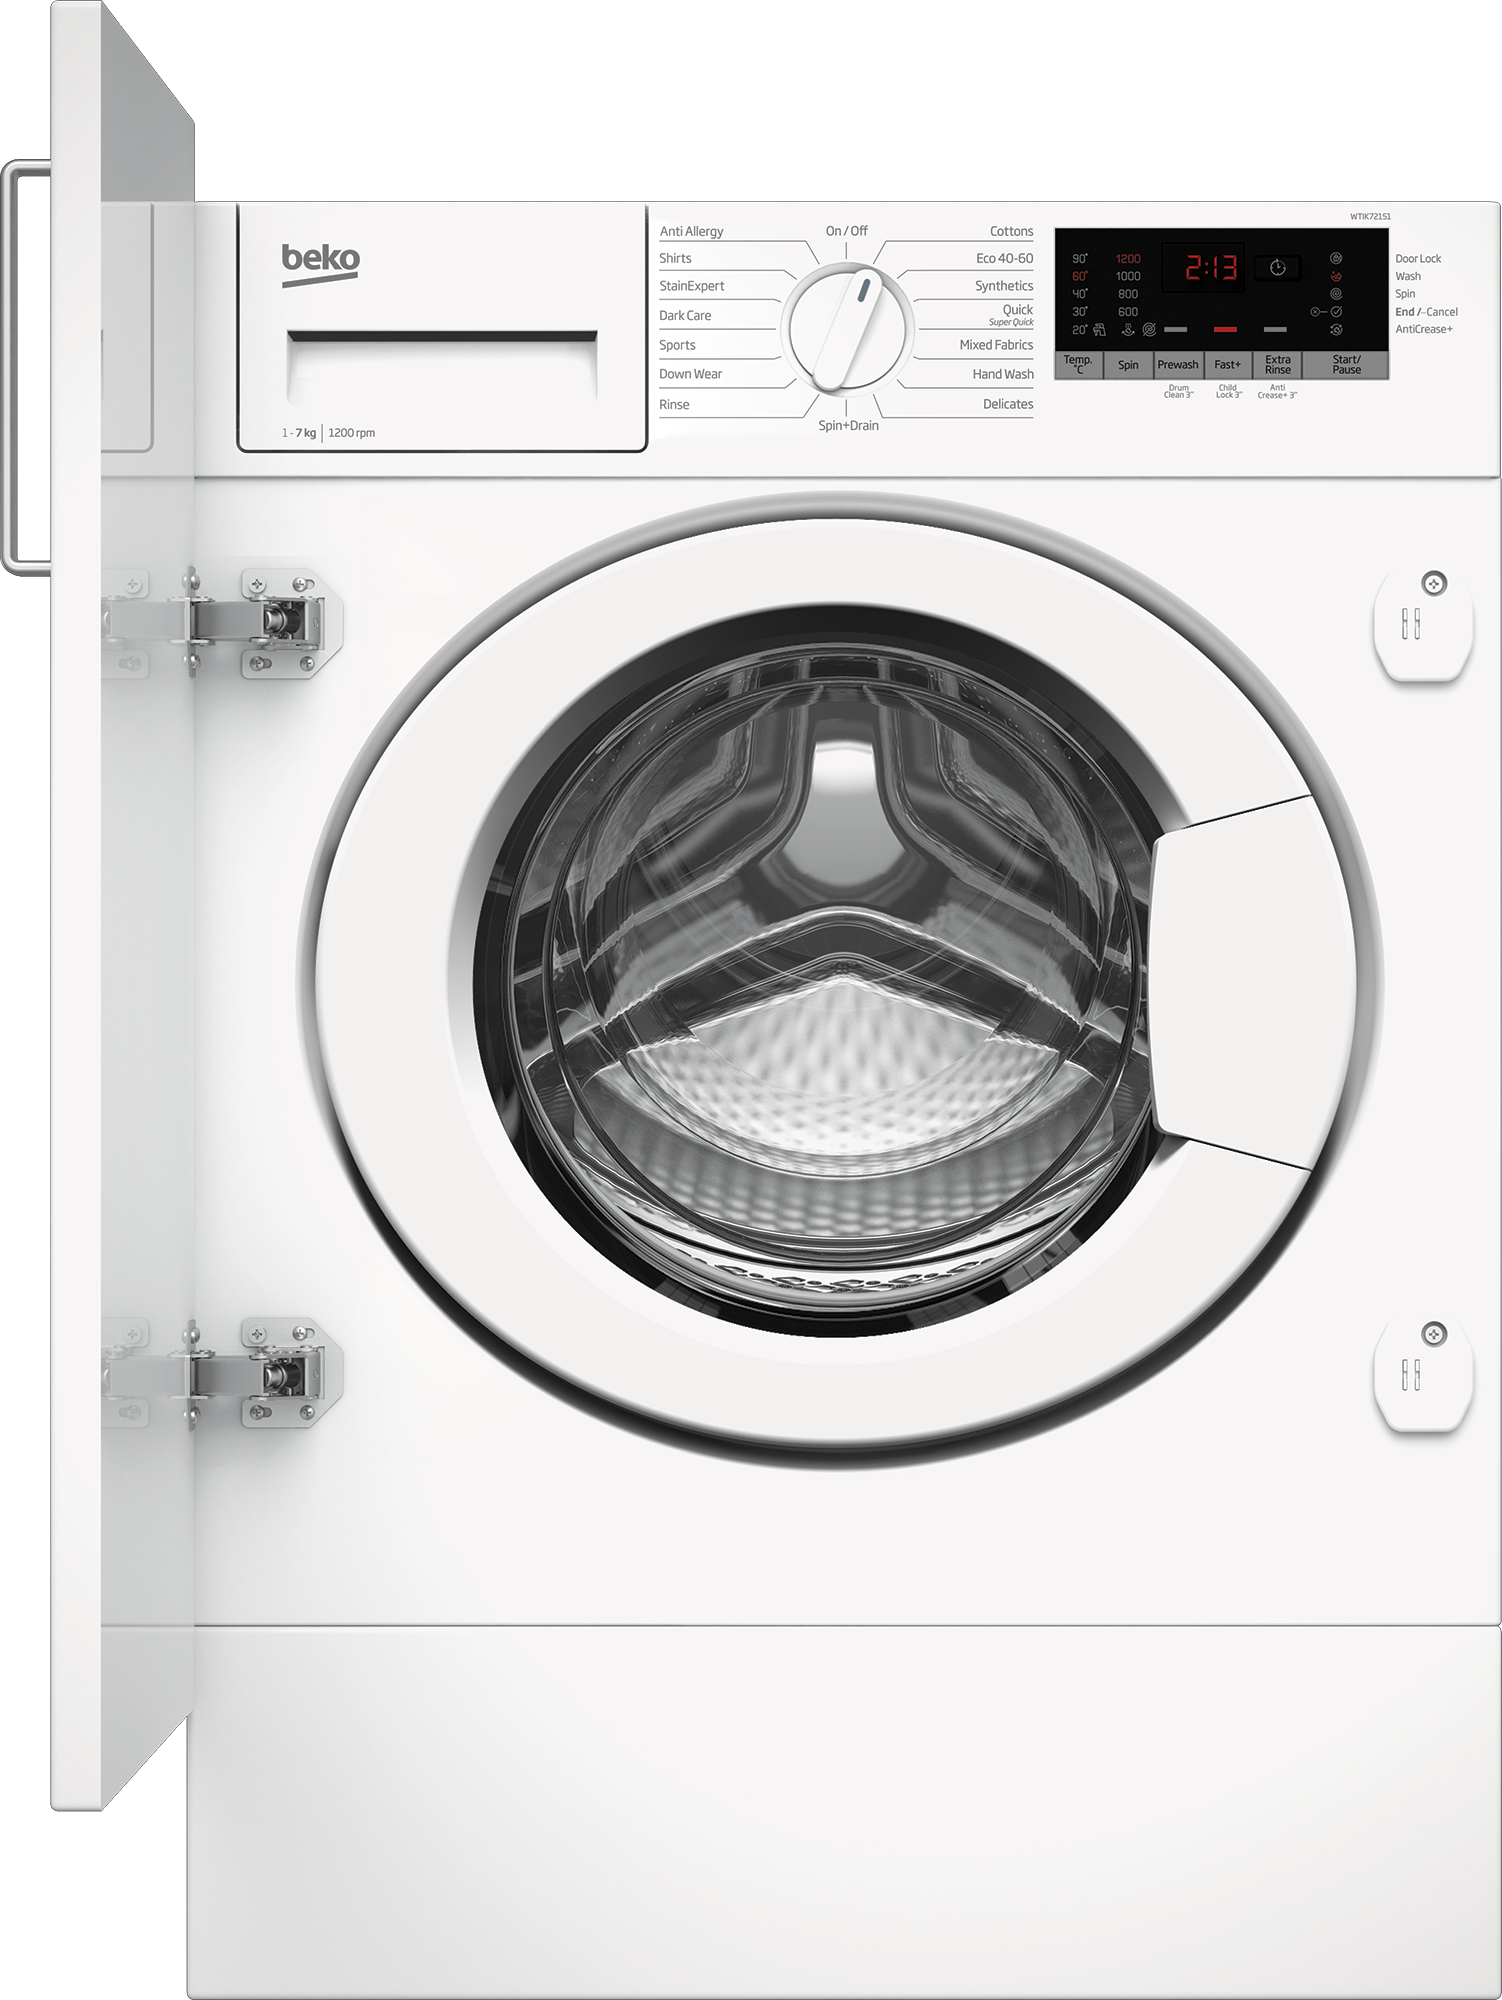 Beko WTIK72151 Integrated 7kg Washing Machine with 1200 rpm - White - C Rated, White